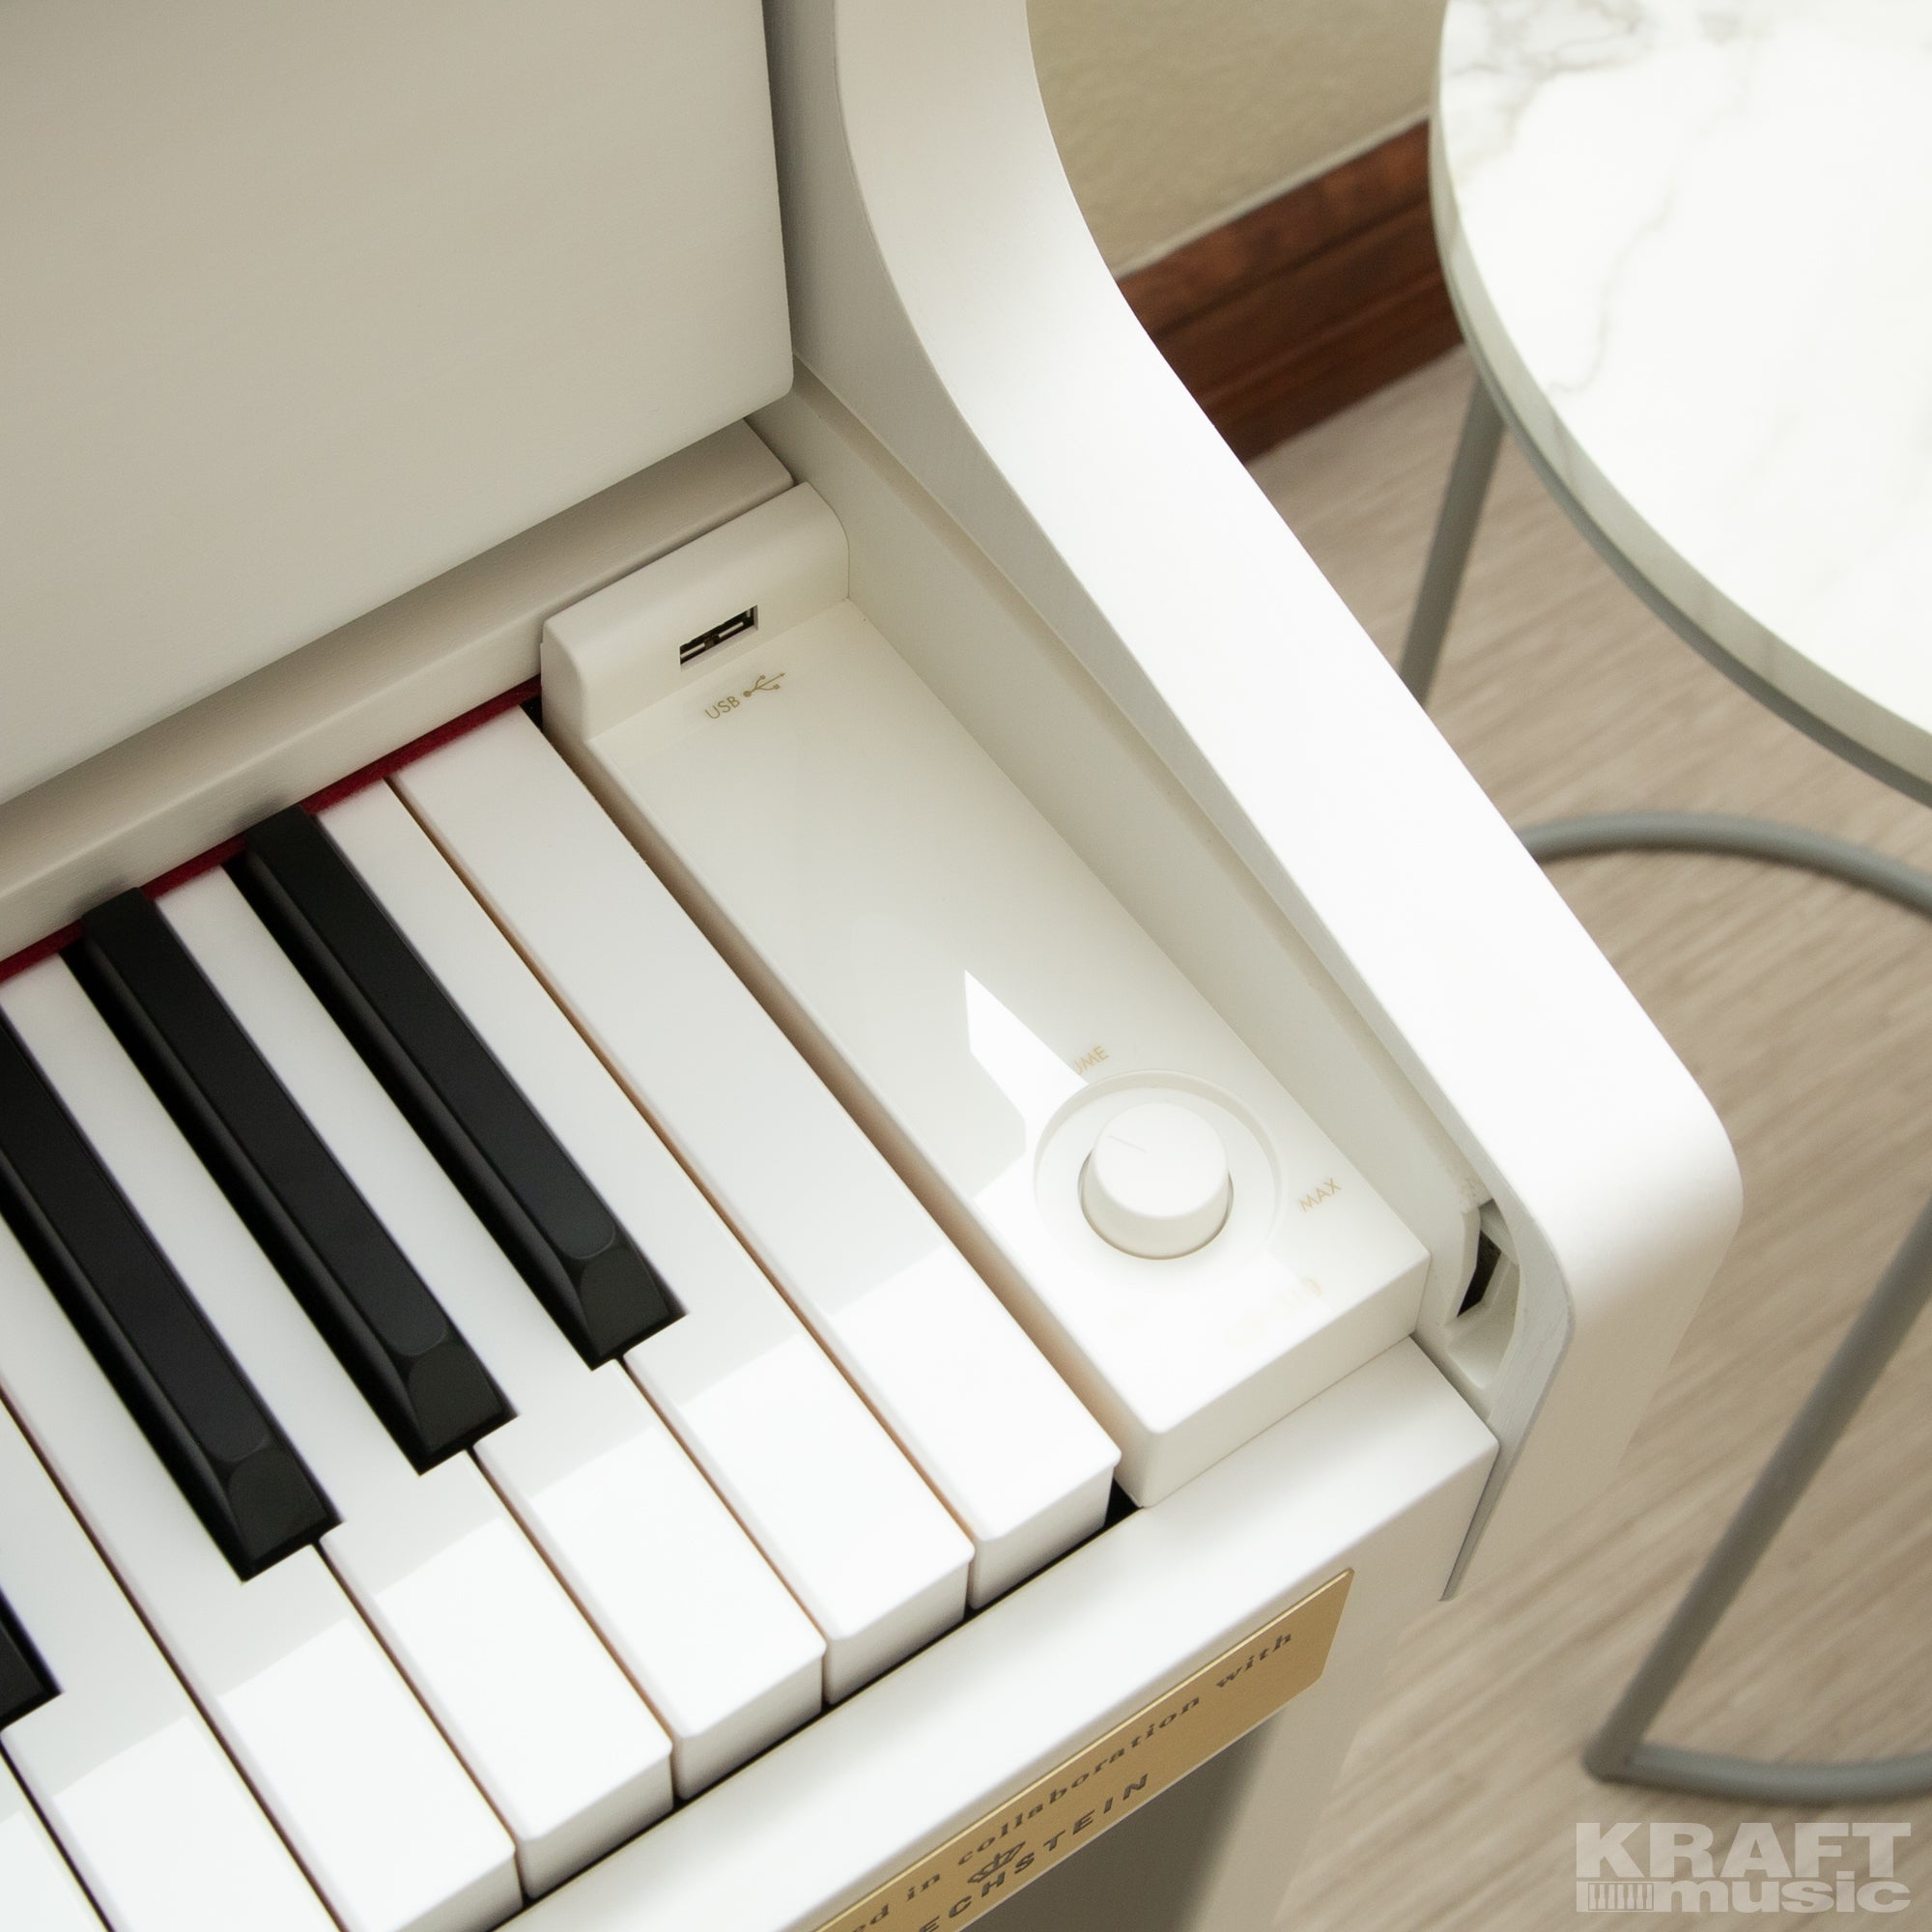 Casio Celviano Grand Hybrid GP-310 Digital Piano - Natural White Wood - Power and volume controls